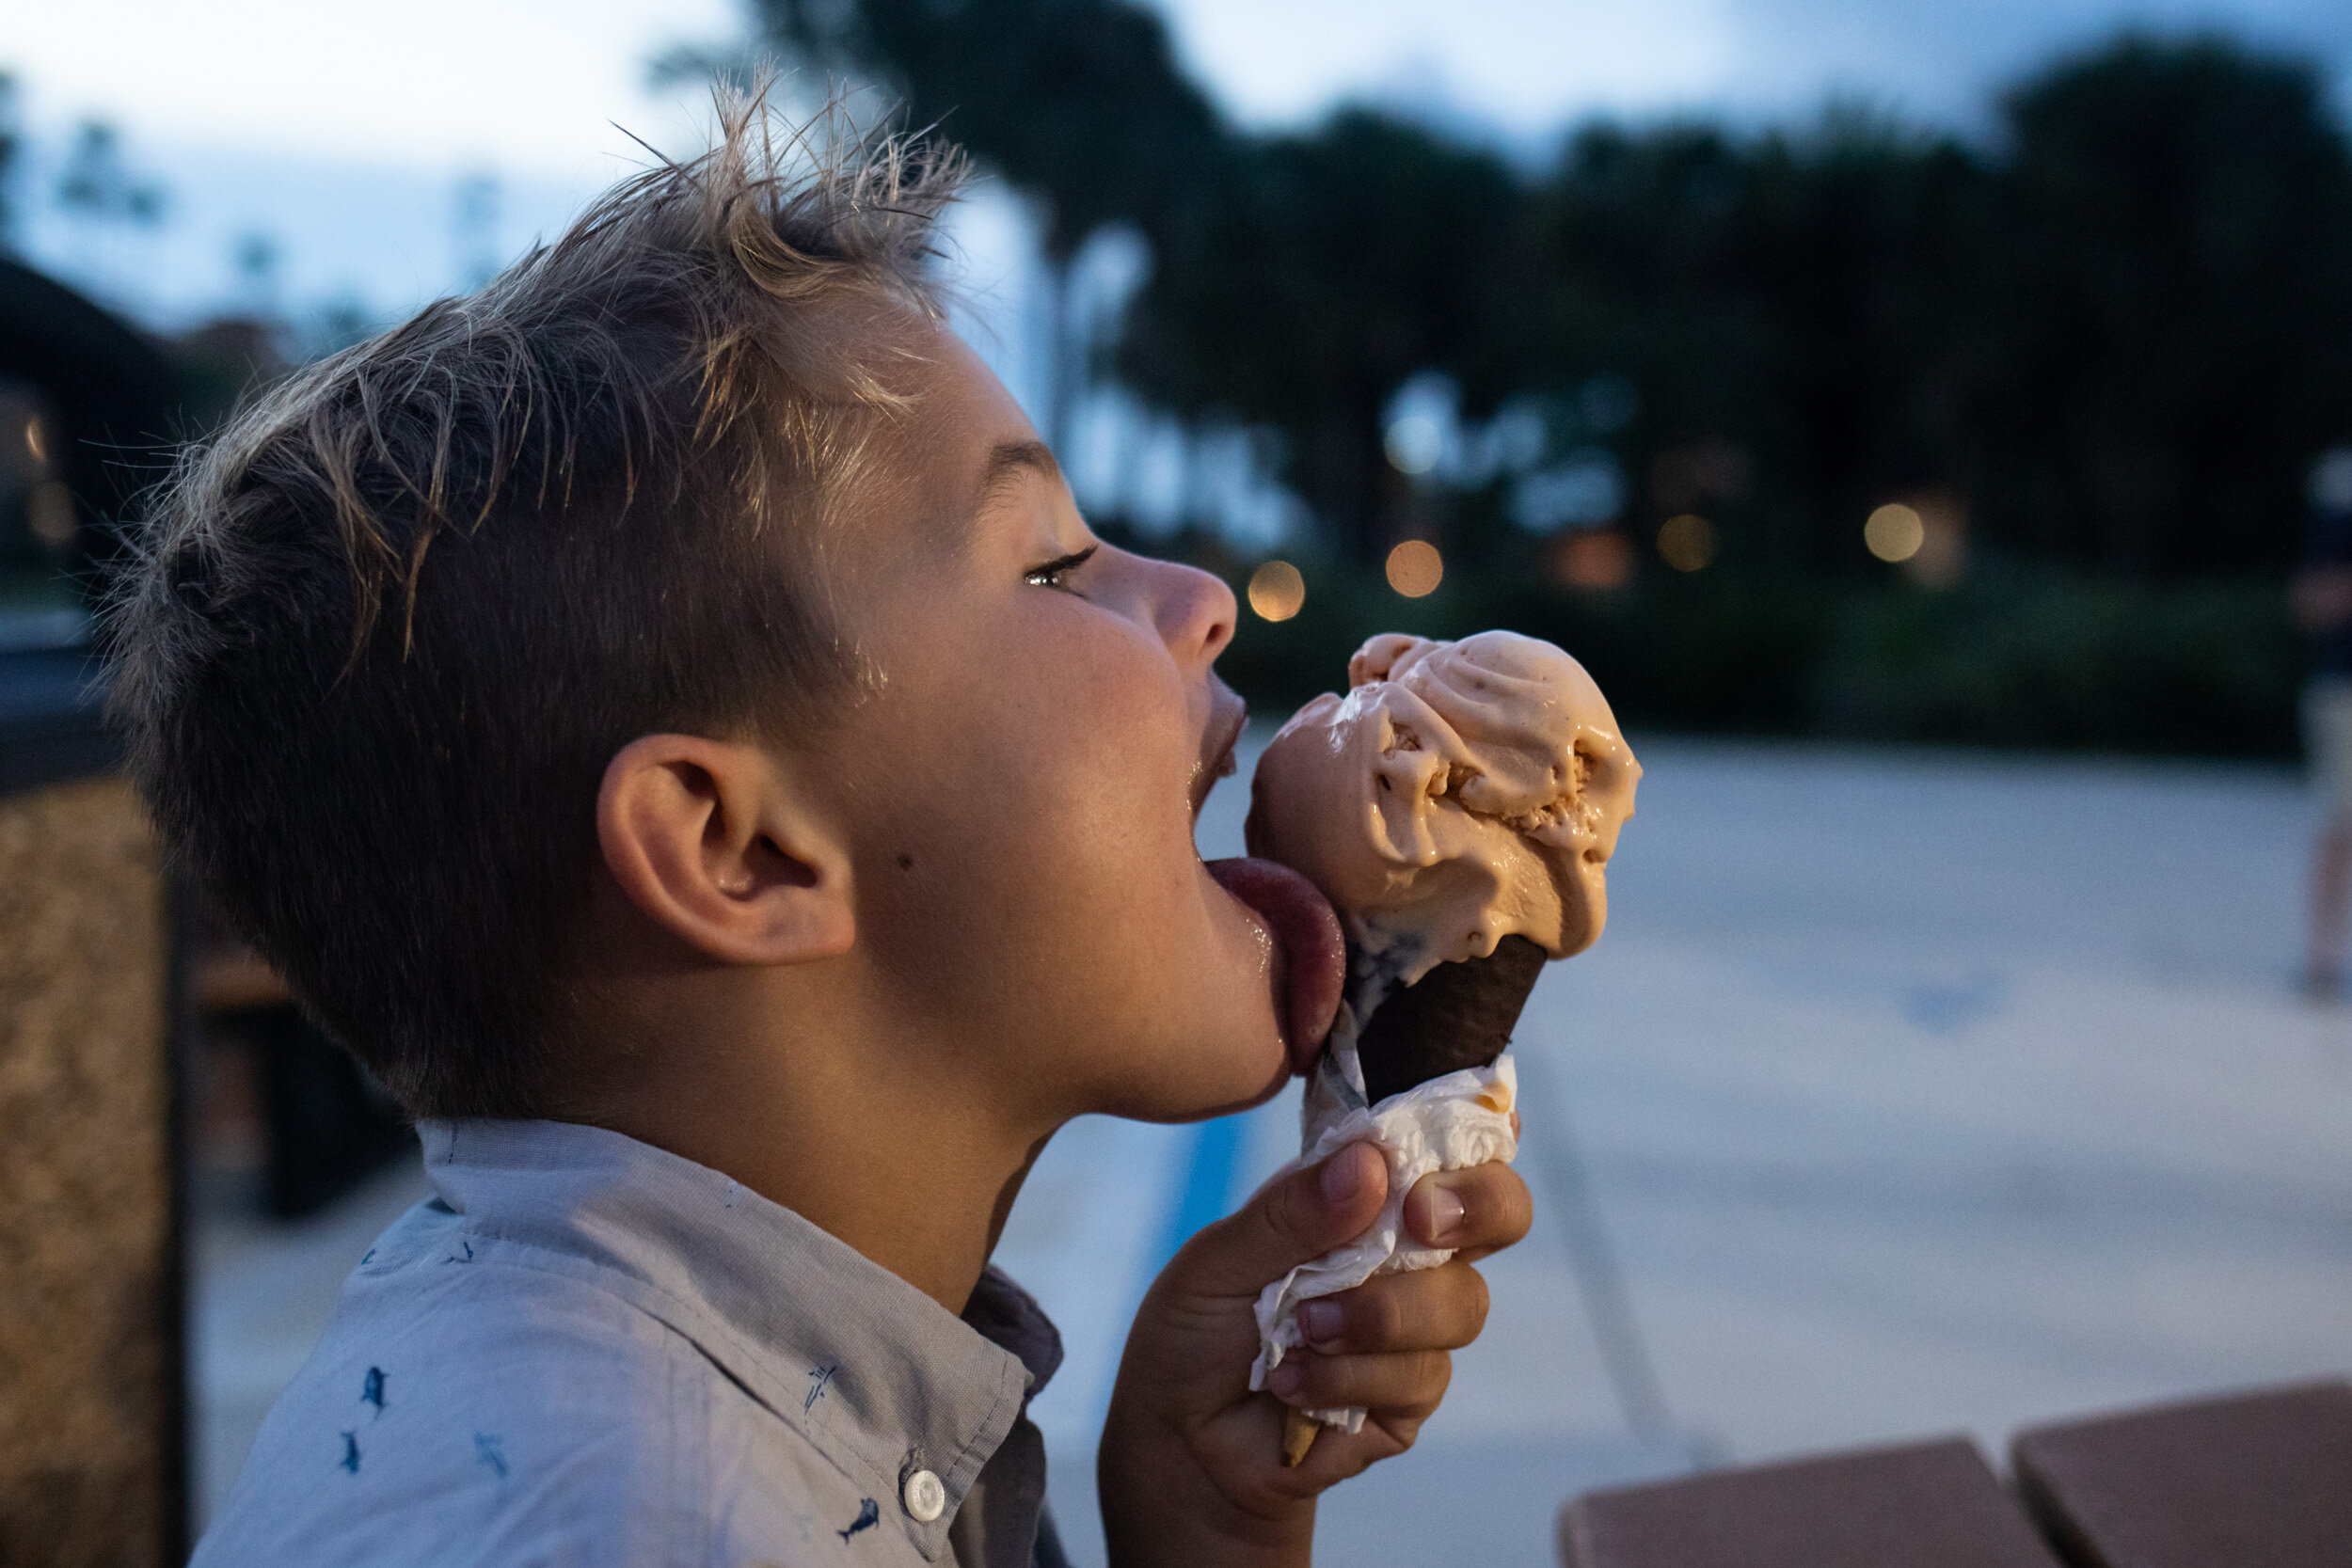 little boy licking his ice cream cone